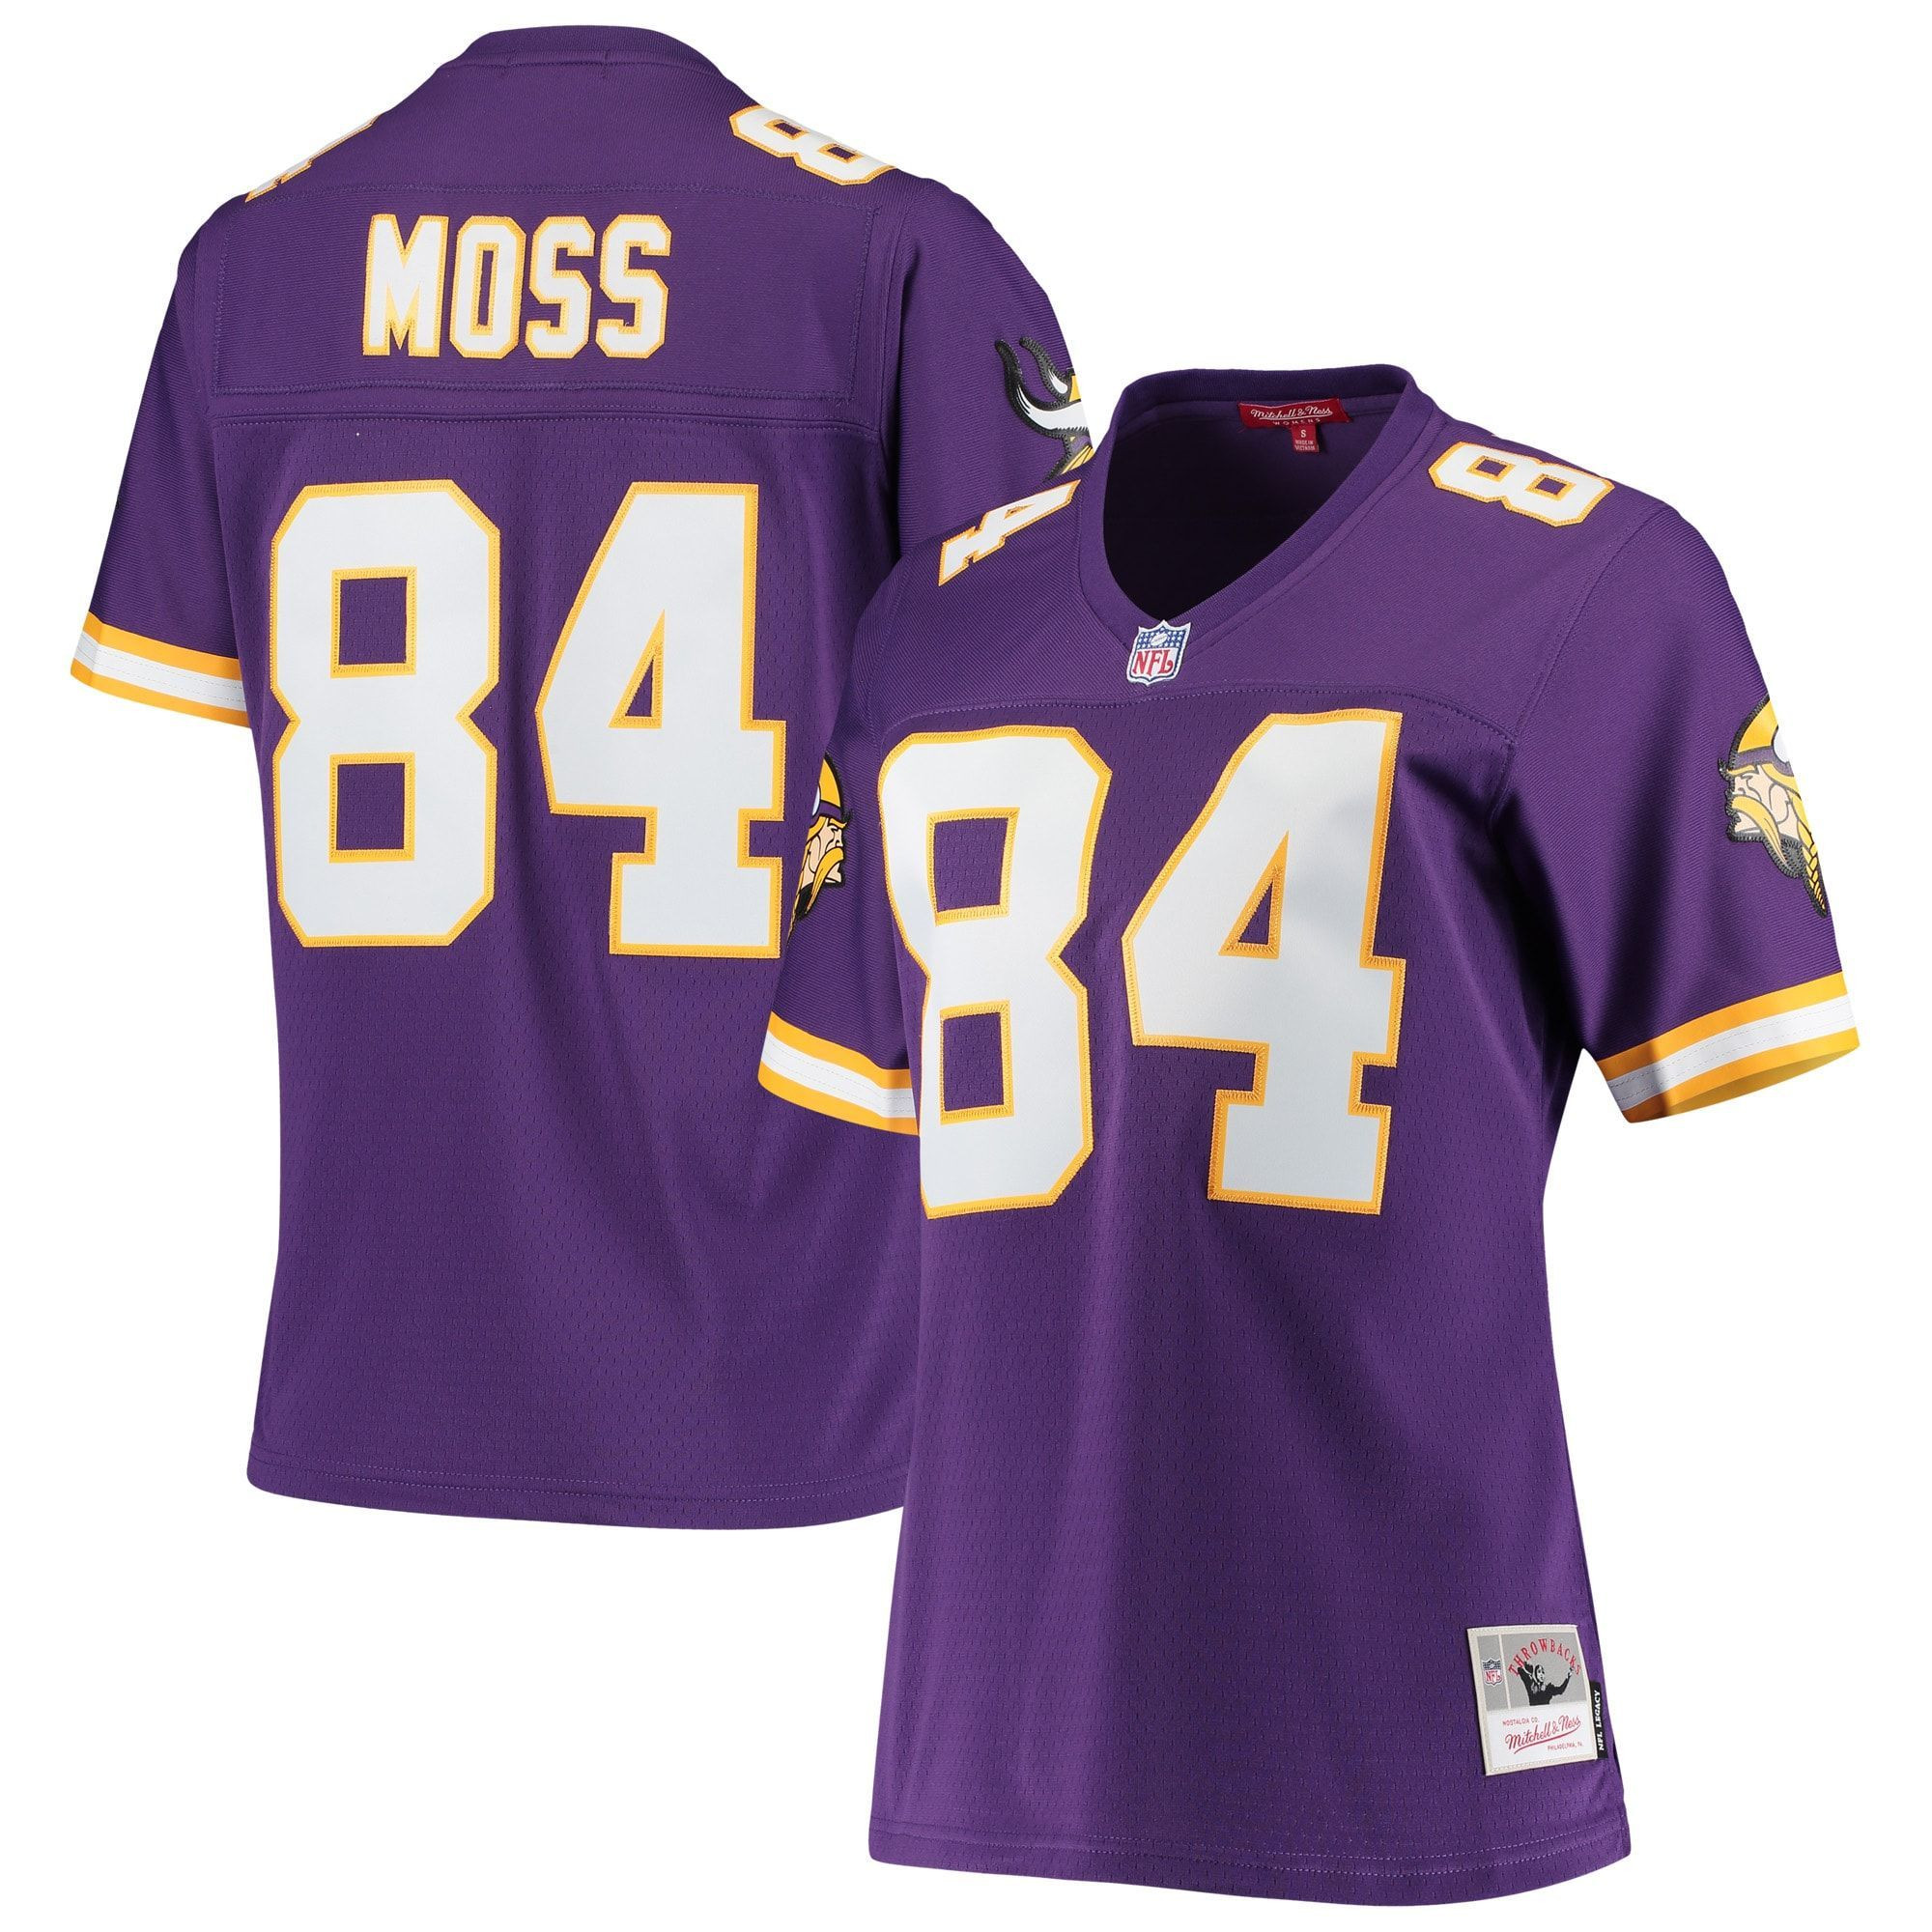 Womens Minnesota Vikings Randy Moss Purple Legacy Team Jersey Gift for Minnesota Vikings fans